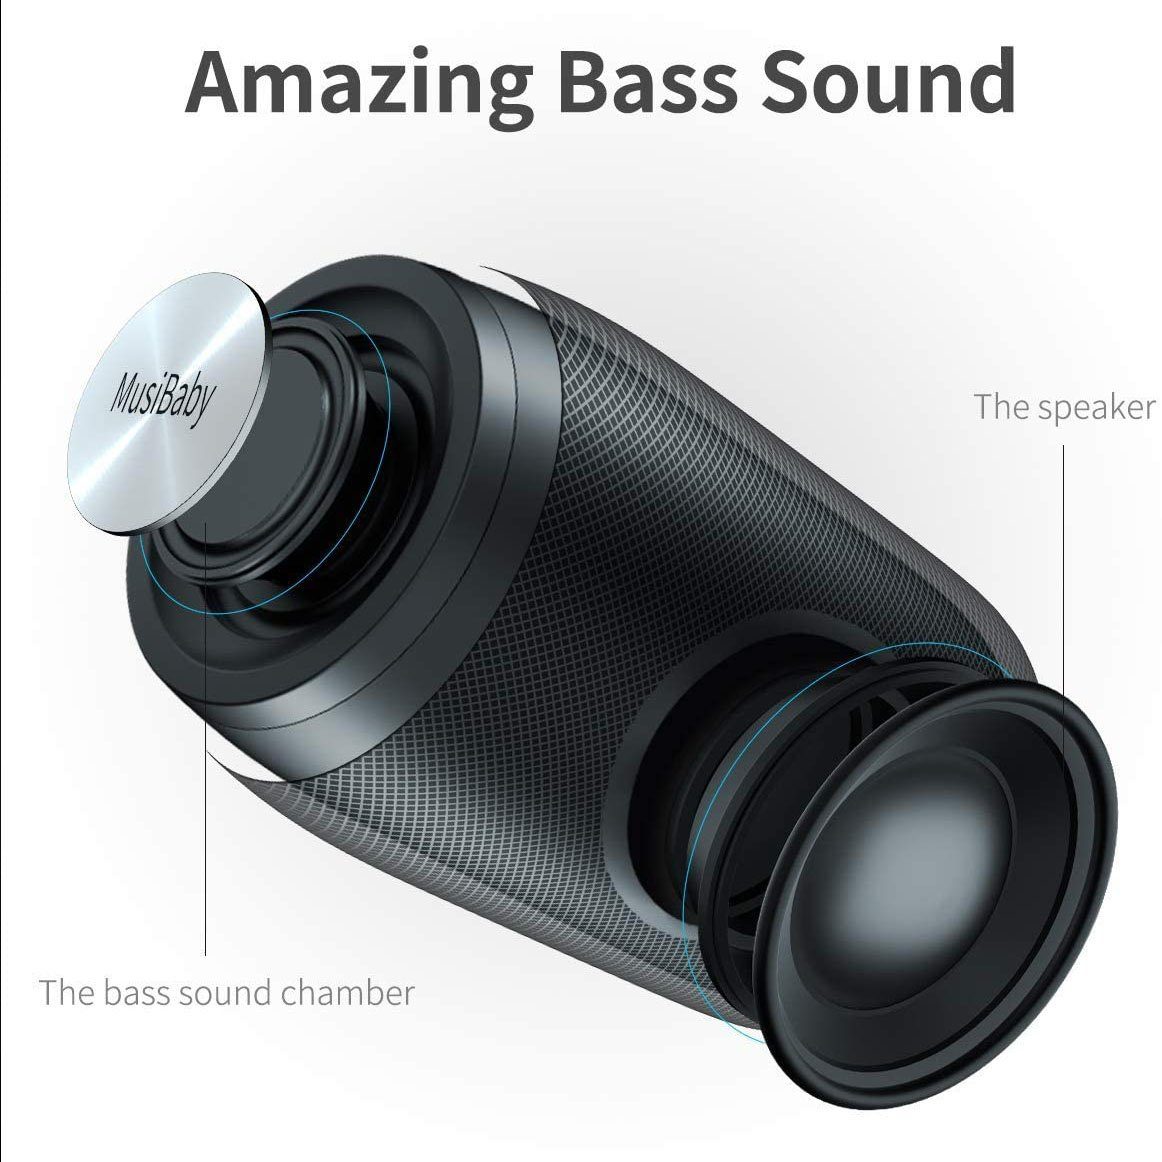 Dual Pairing Bluetooth 5.0 Speaker